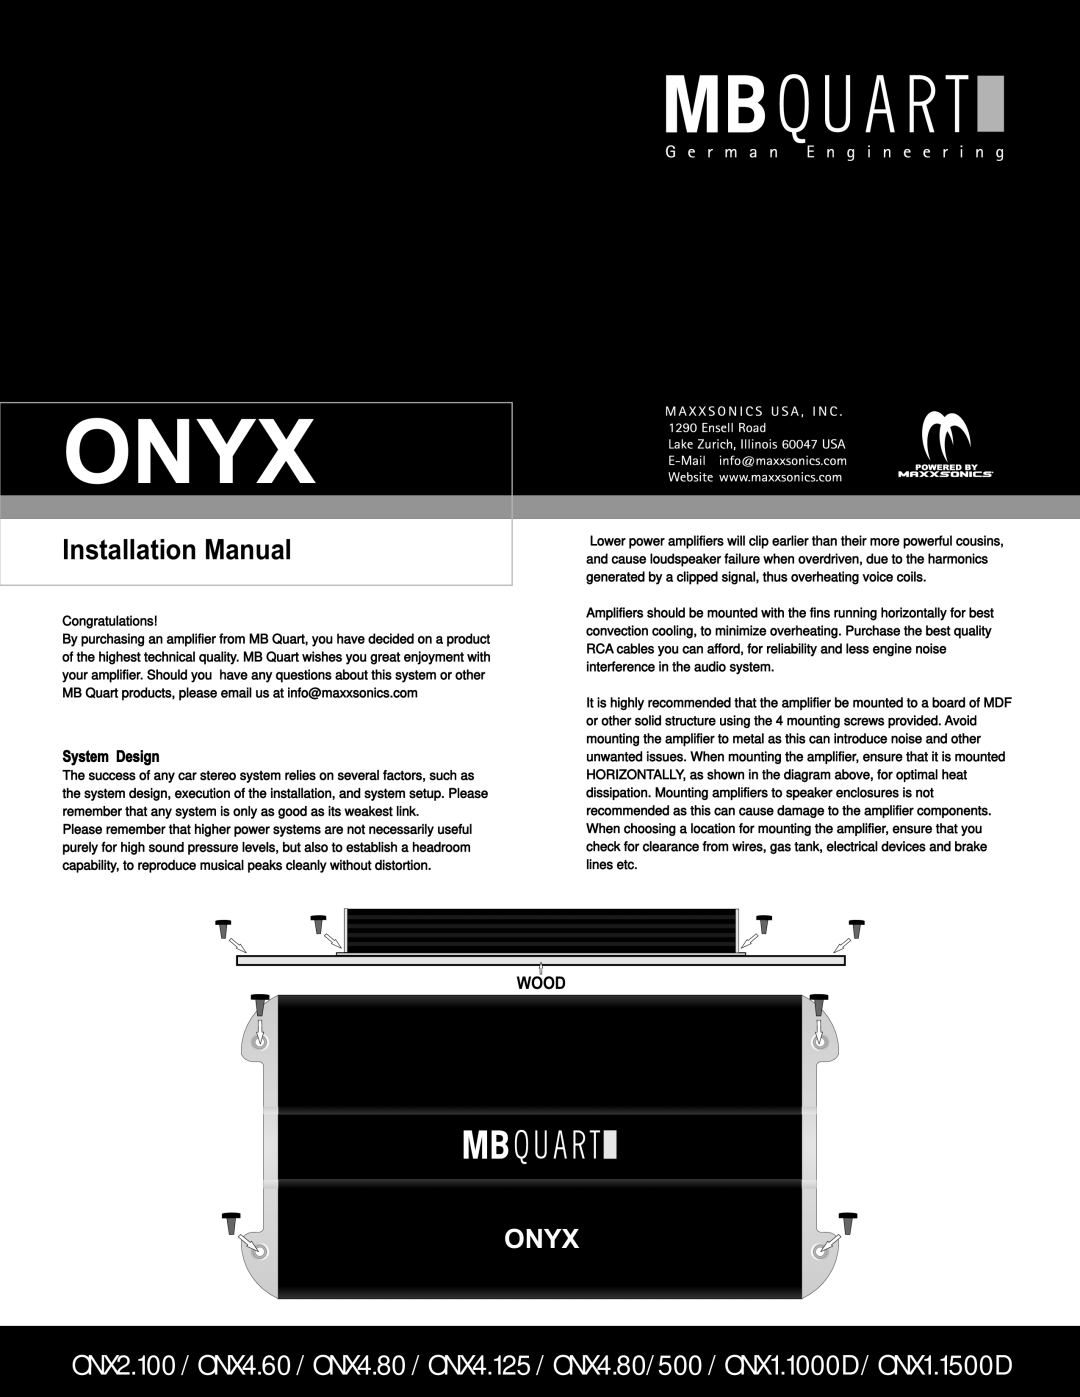 MB QUART ONX1.1500D, ONX4.60, ONX4.80/500, ONX4.125, ONX1.1000D installation manual Installation Manual, Congratulations 